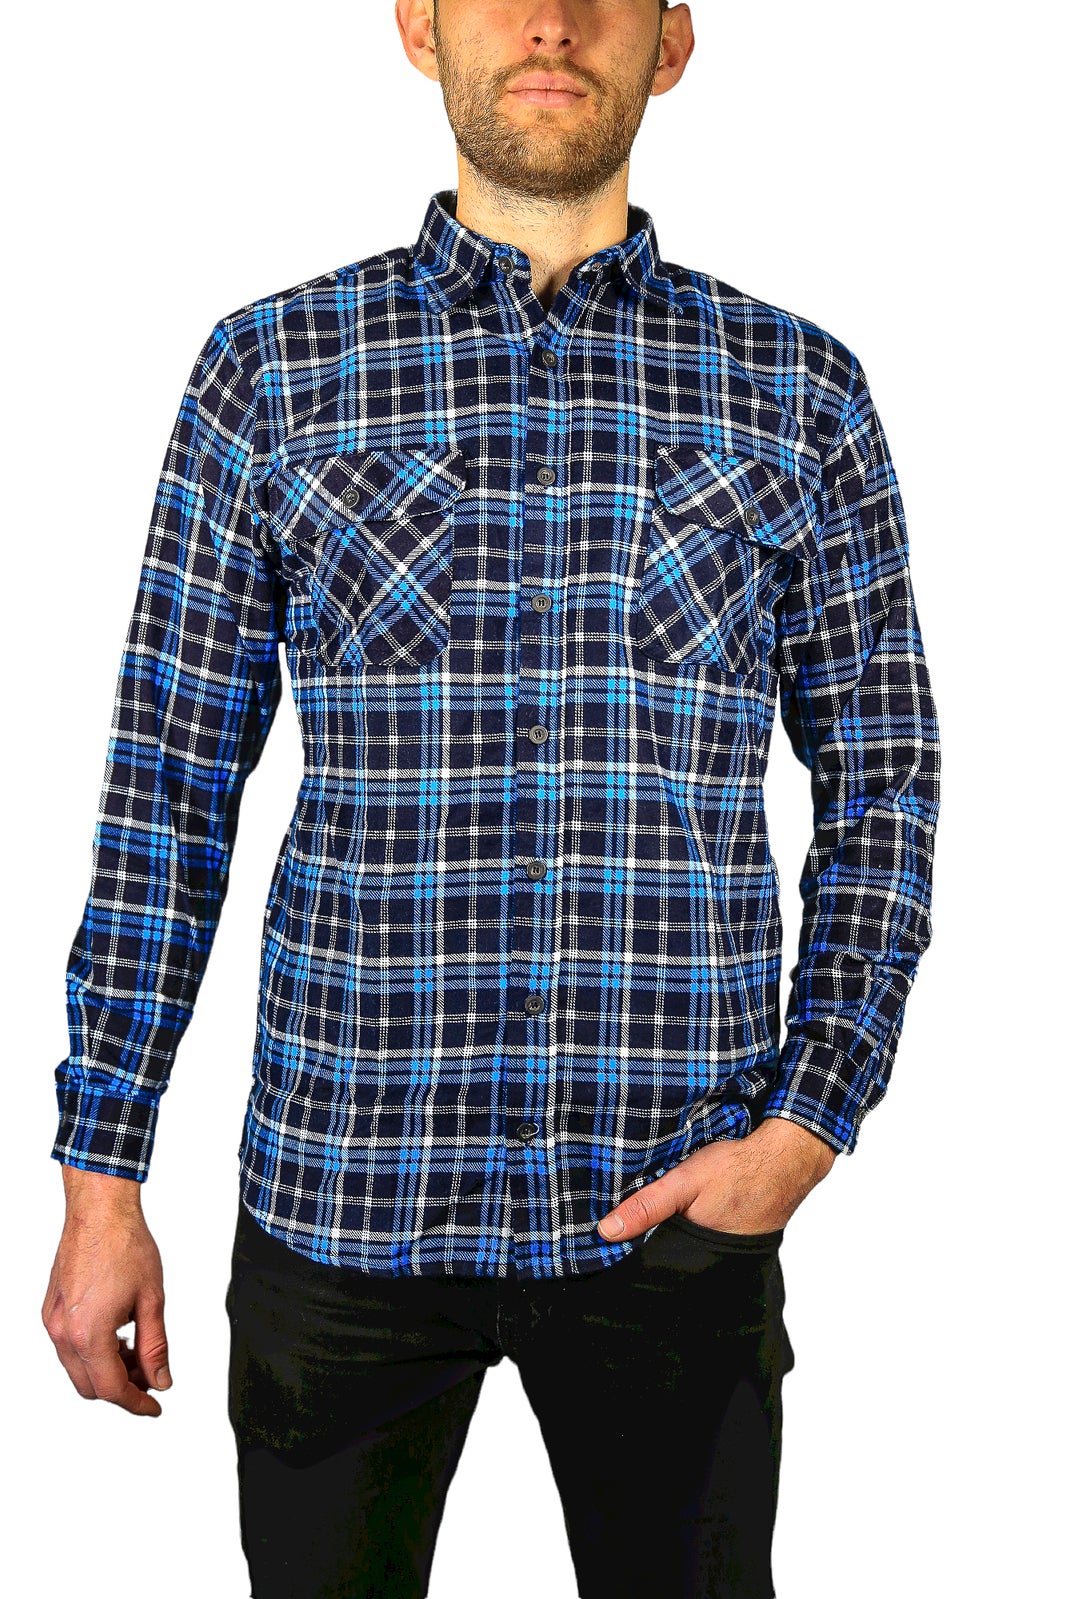 Mens Flannelette Long Sleeve Shirt 100% Cotton Check Authentic Flannel - Full Placket